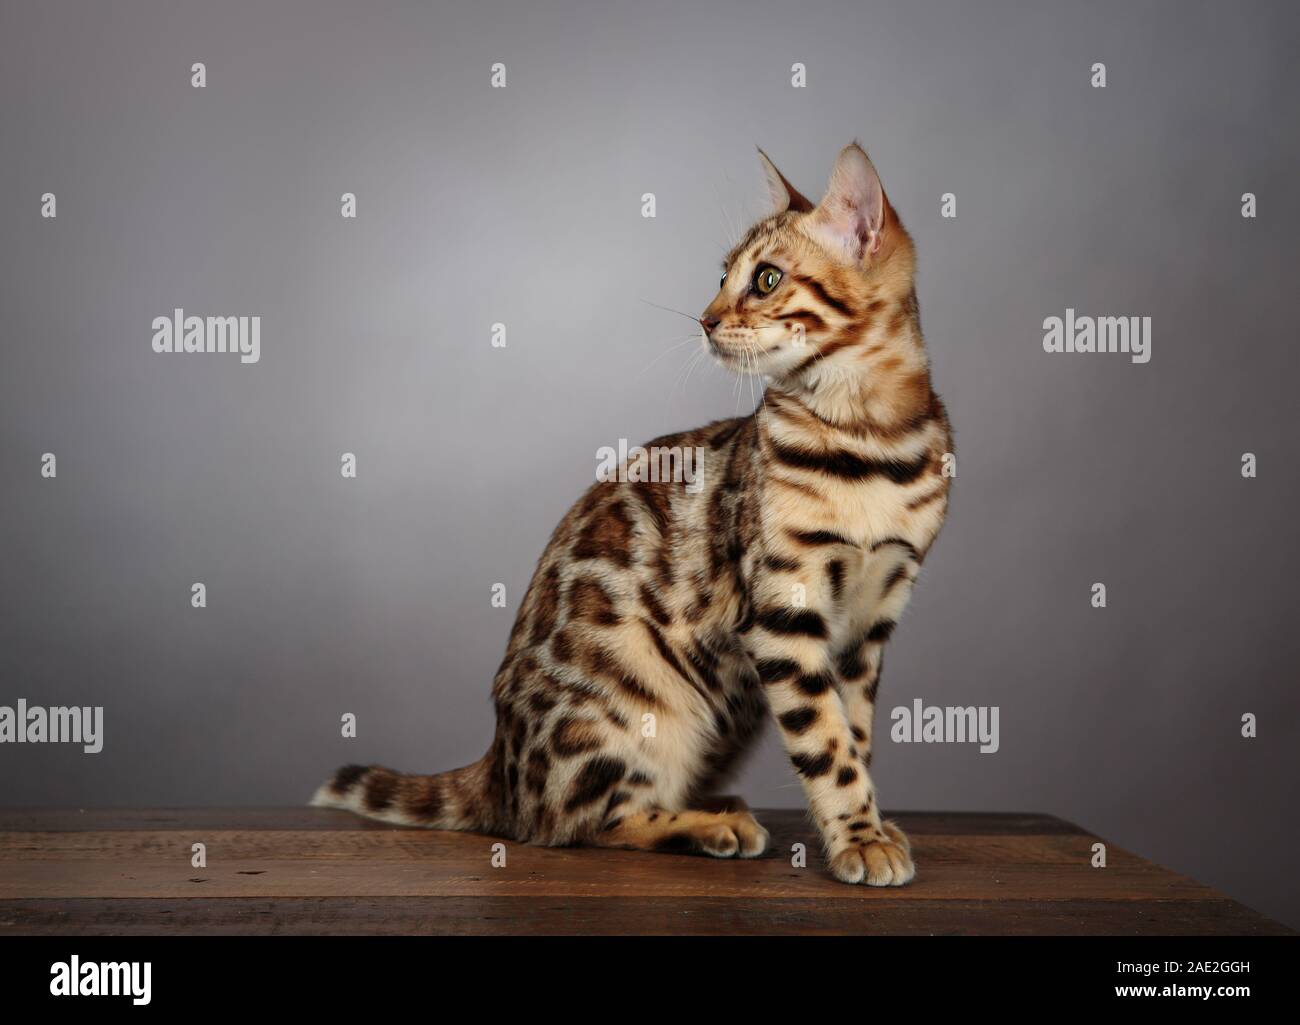 Young Bengal Cat Studio Portrait on wooden desk Stock Photo